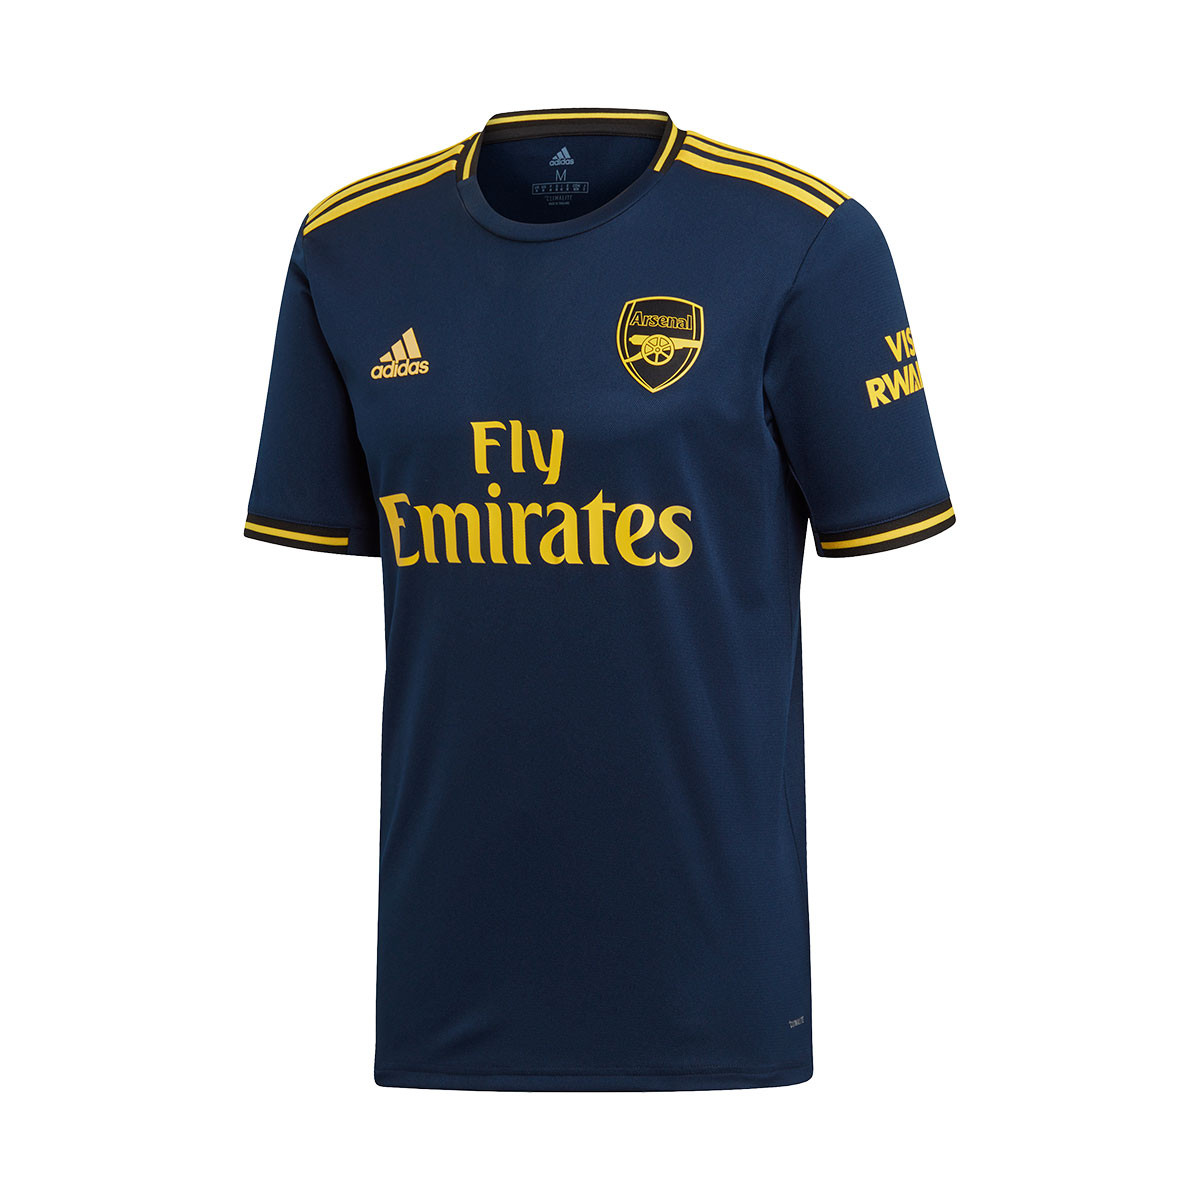 Jersey Adidas Arsenal Fc 2019 2020 Third Art Football Store